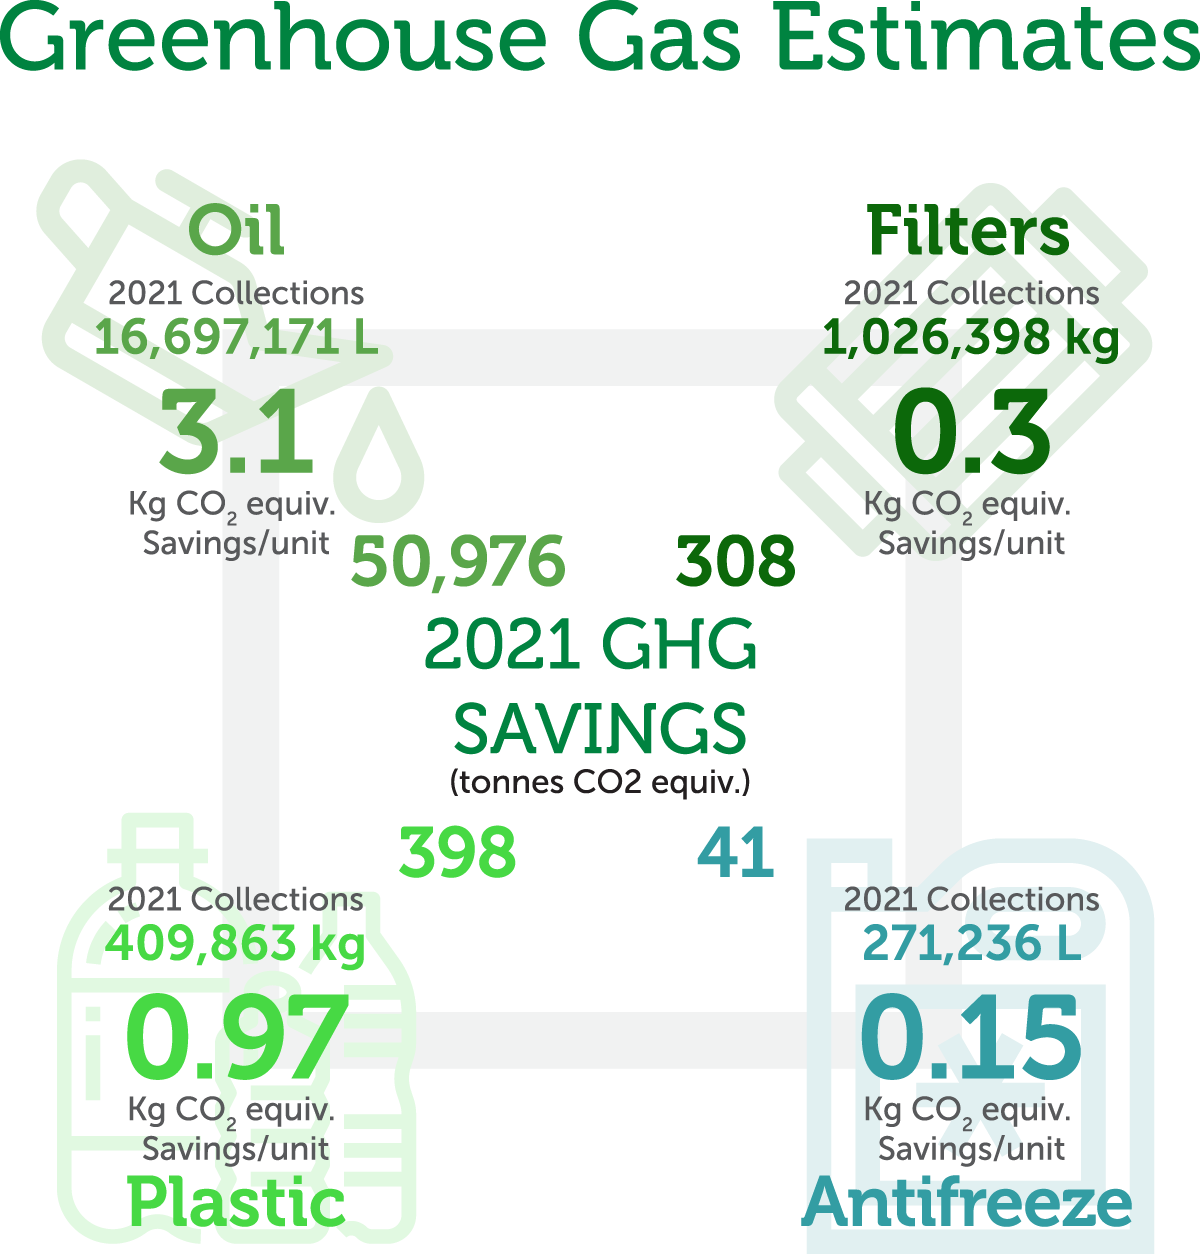 2021 Greenhouse Gas Estimates